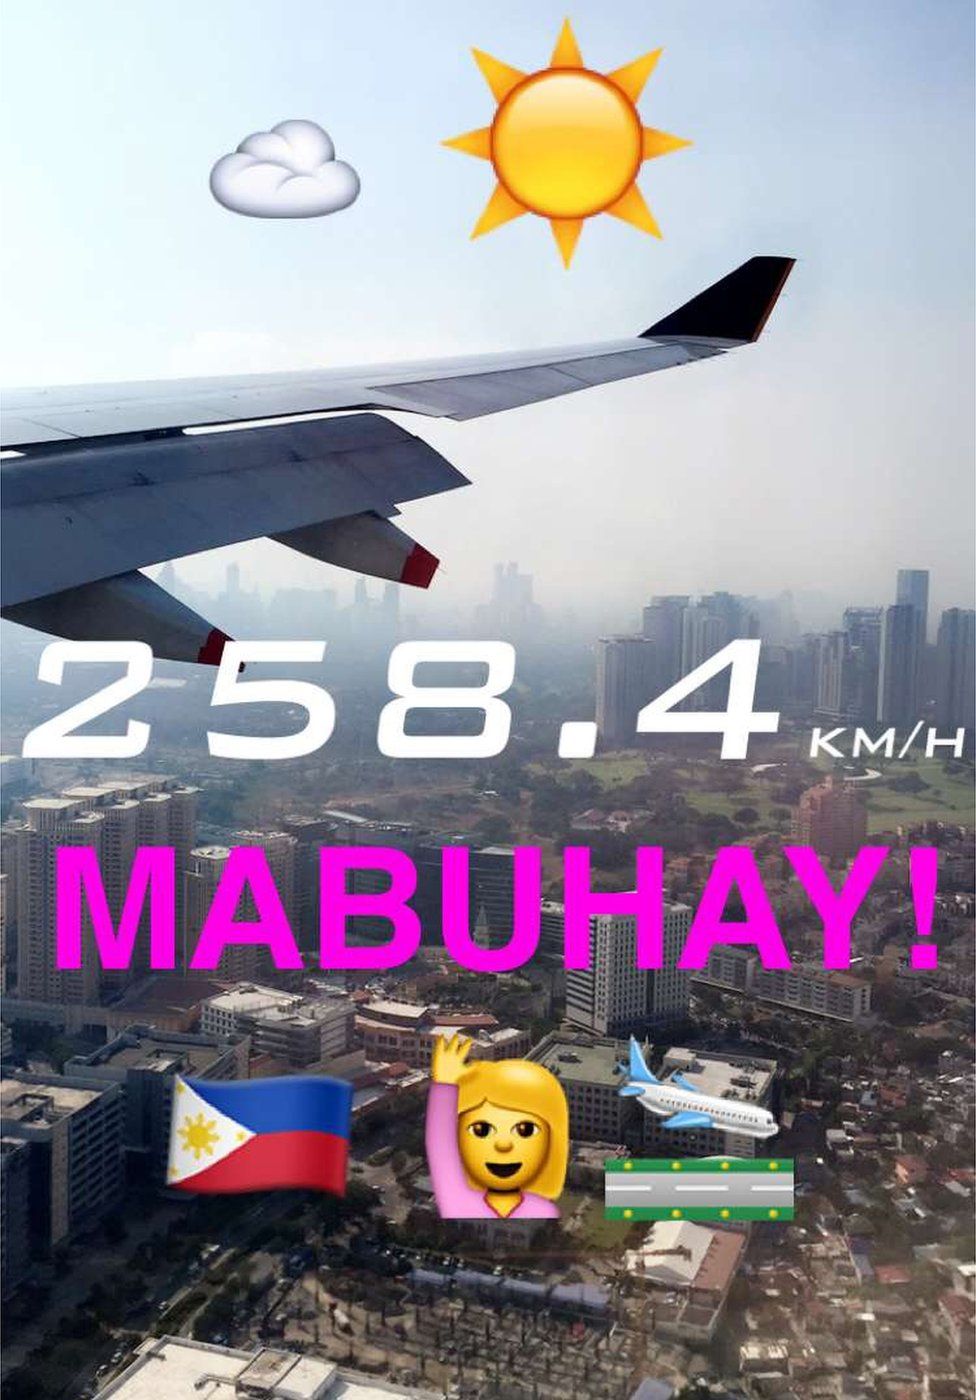 Plane landing in Philippines